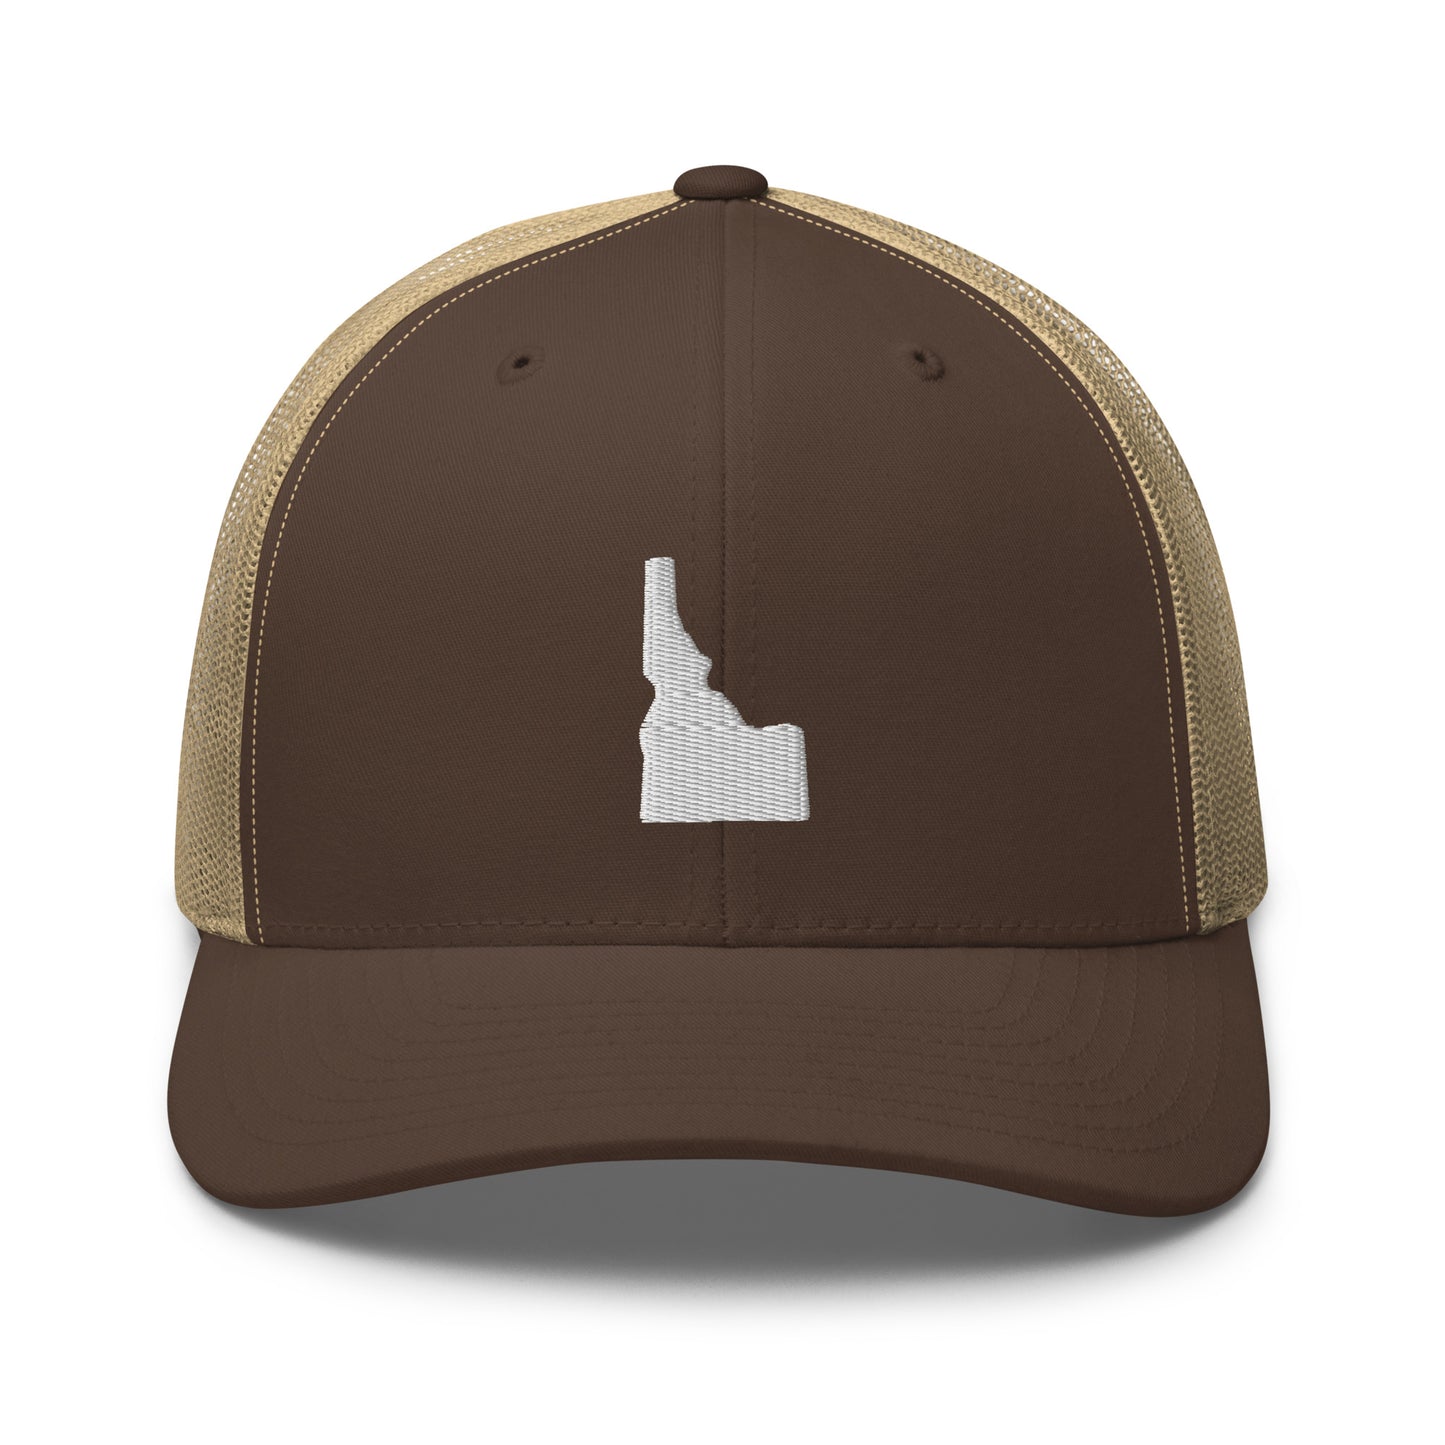 Idaho State Silhouette Mid 6 Panel Snapback Trucker Hat